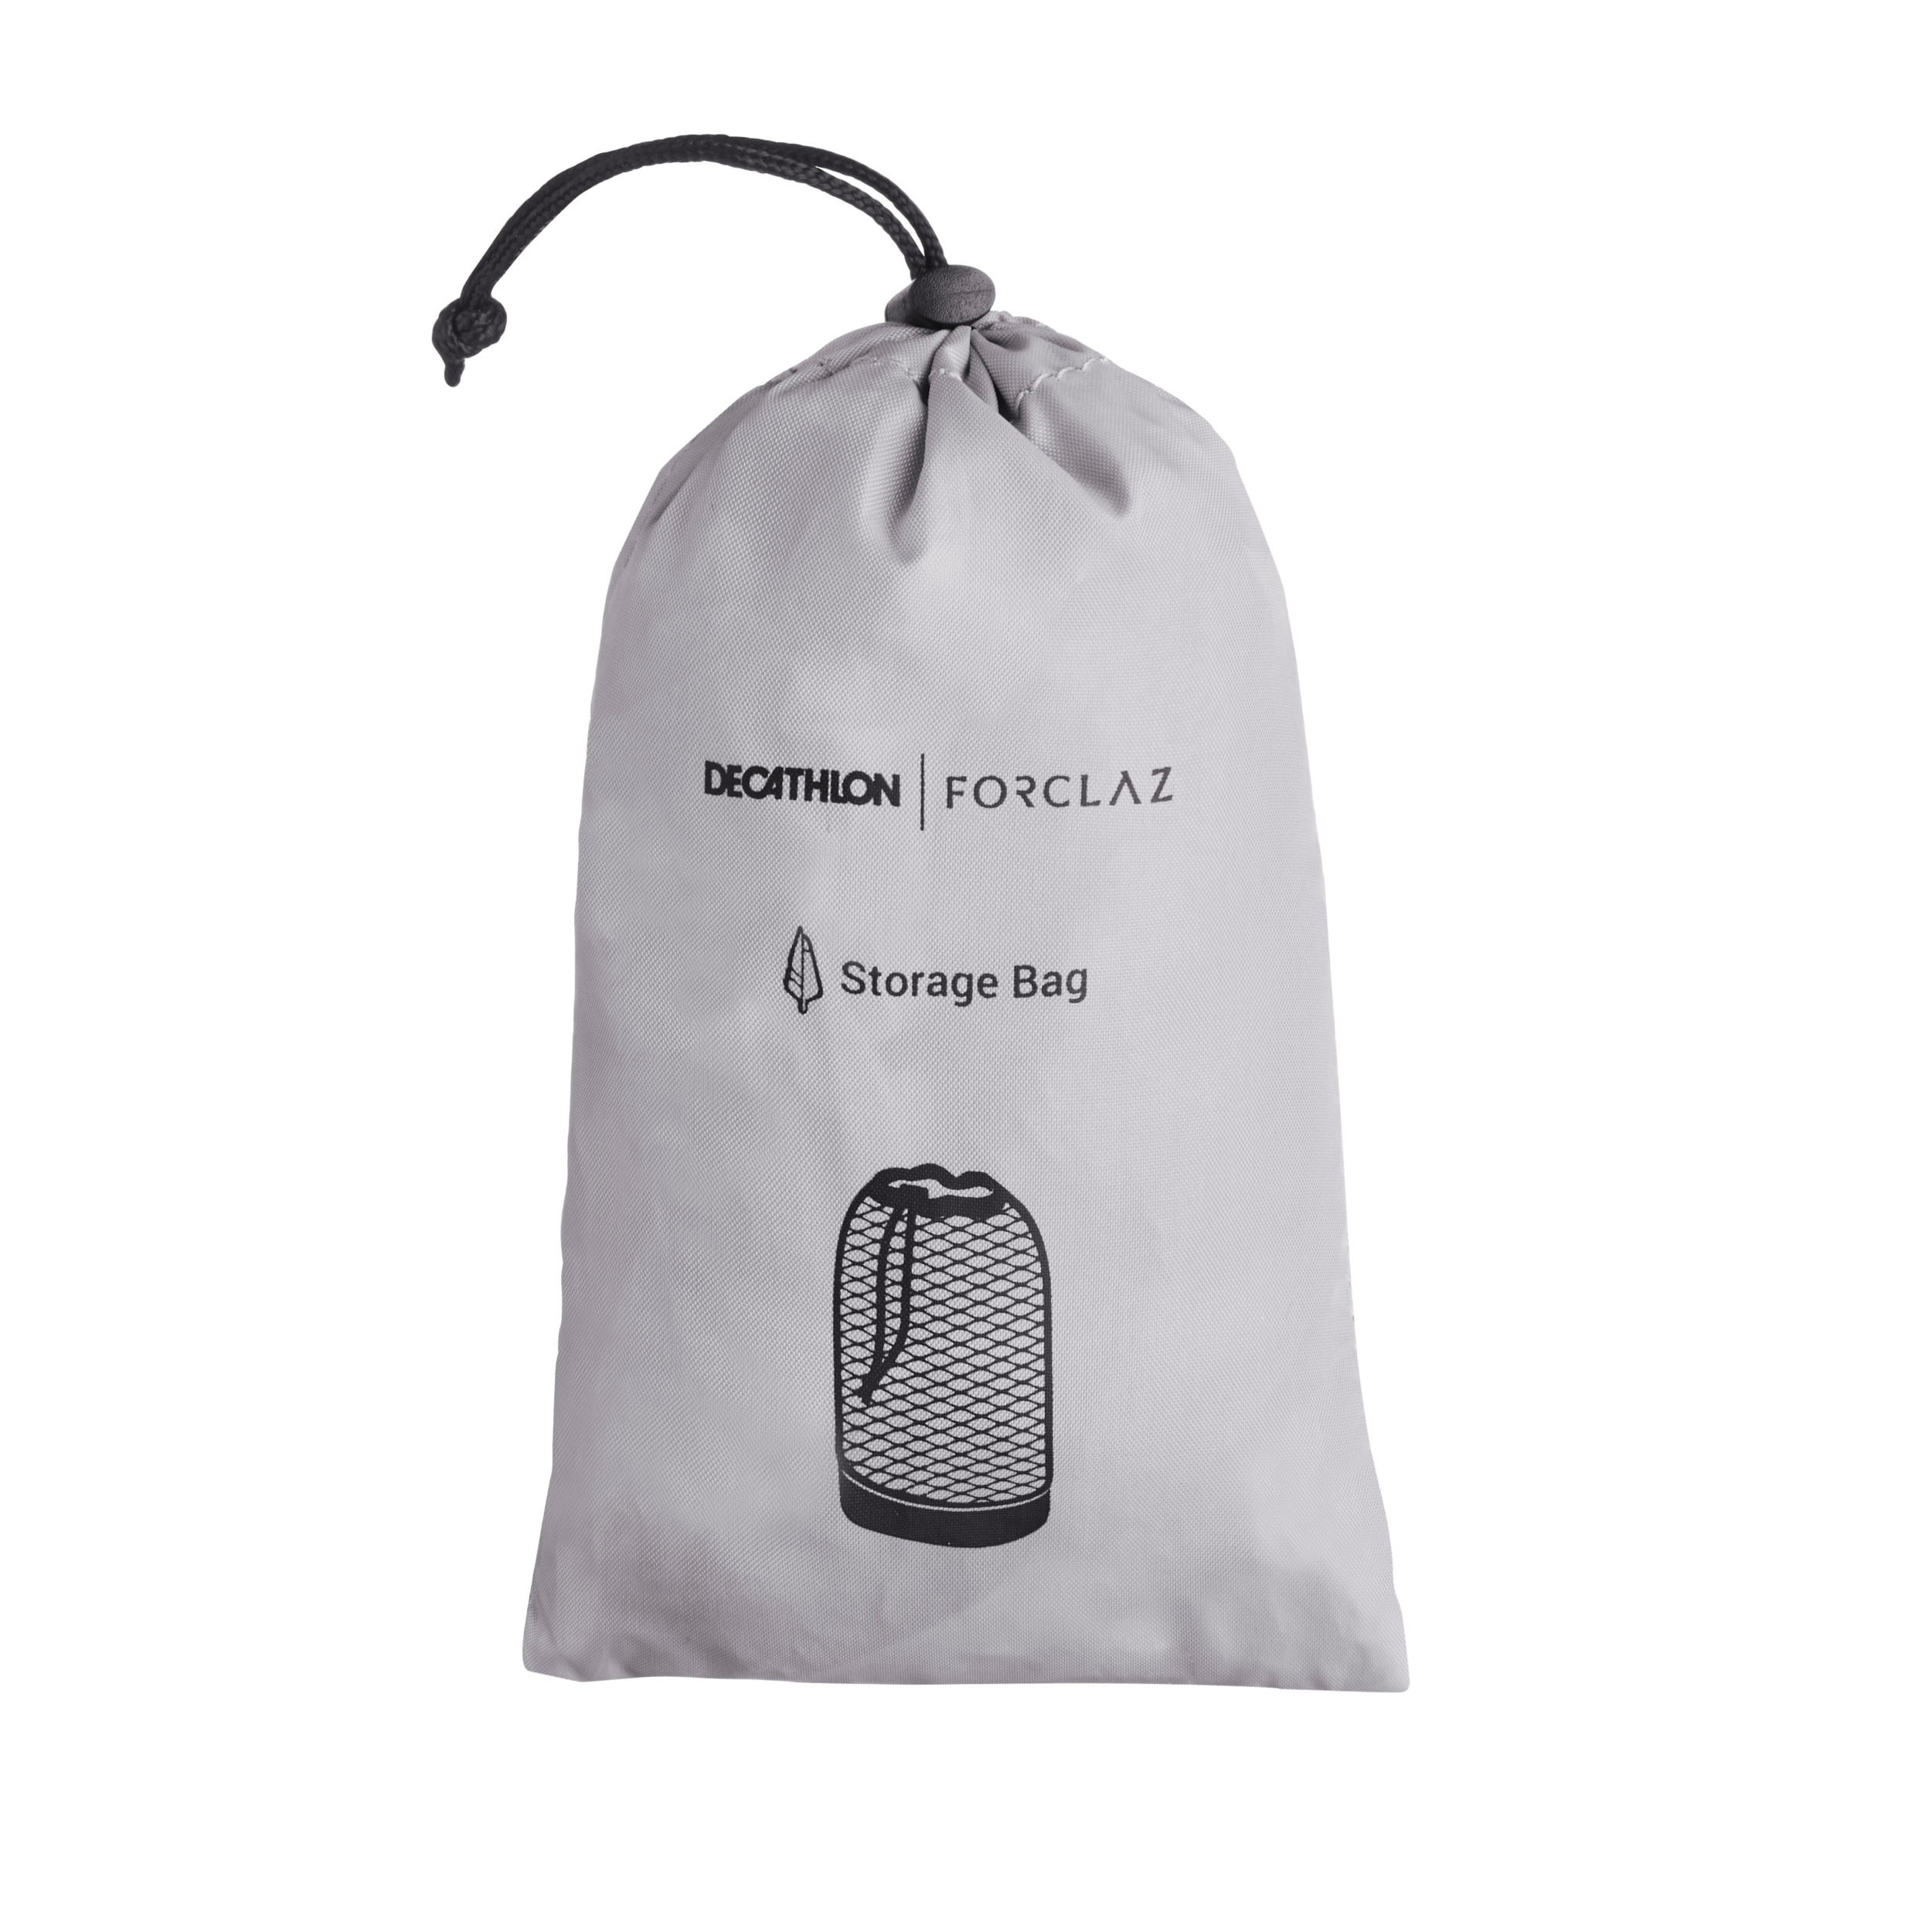 J5pecwanli Outdoor Camping Sleeping Bag Sports Nylon Waterproof Compression Stuff Sack Bag for Camping Hiking Traveling 